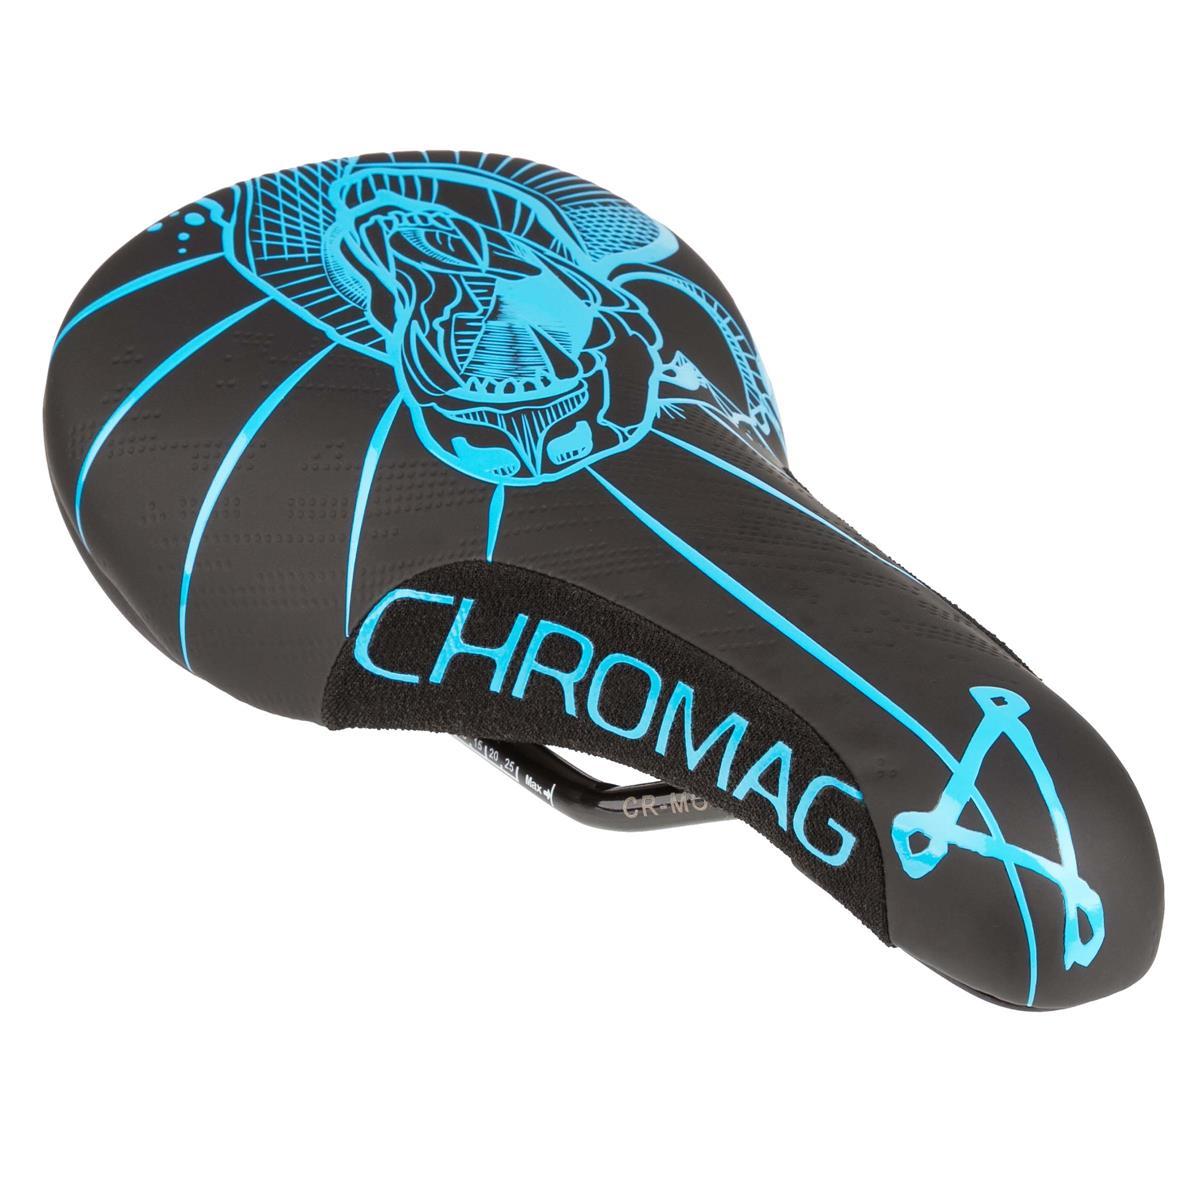 Chromag Saddle Overture 2019 243 x 136 mm, Black/Cyan